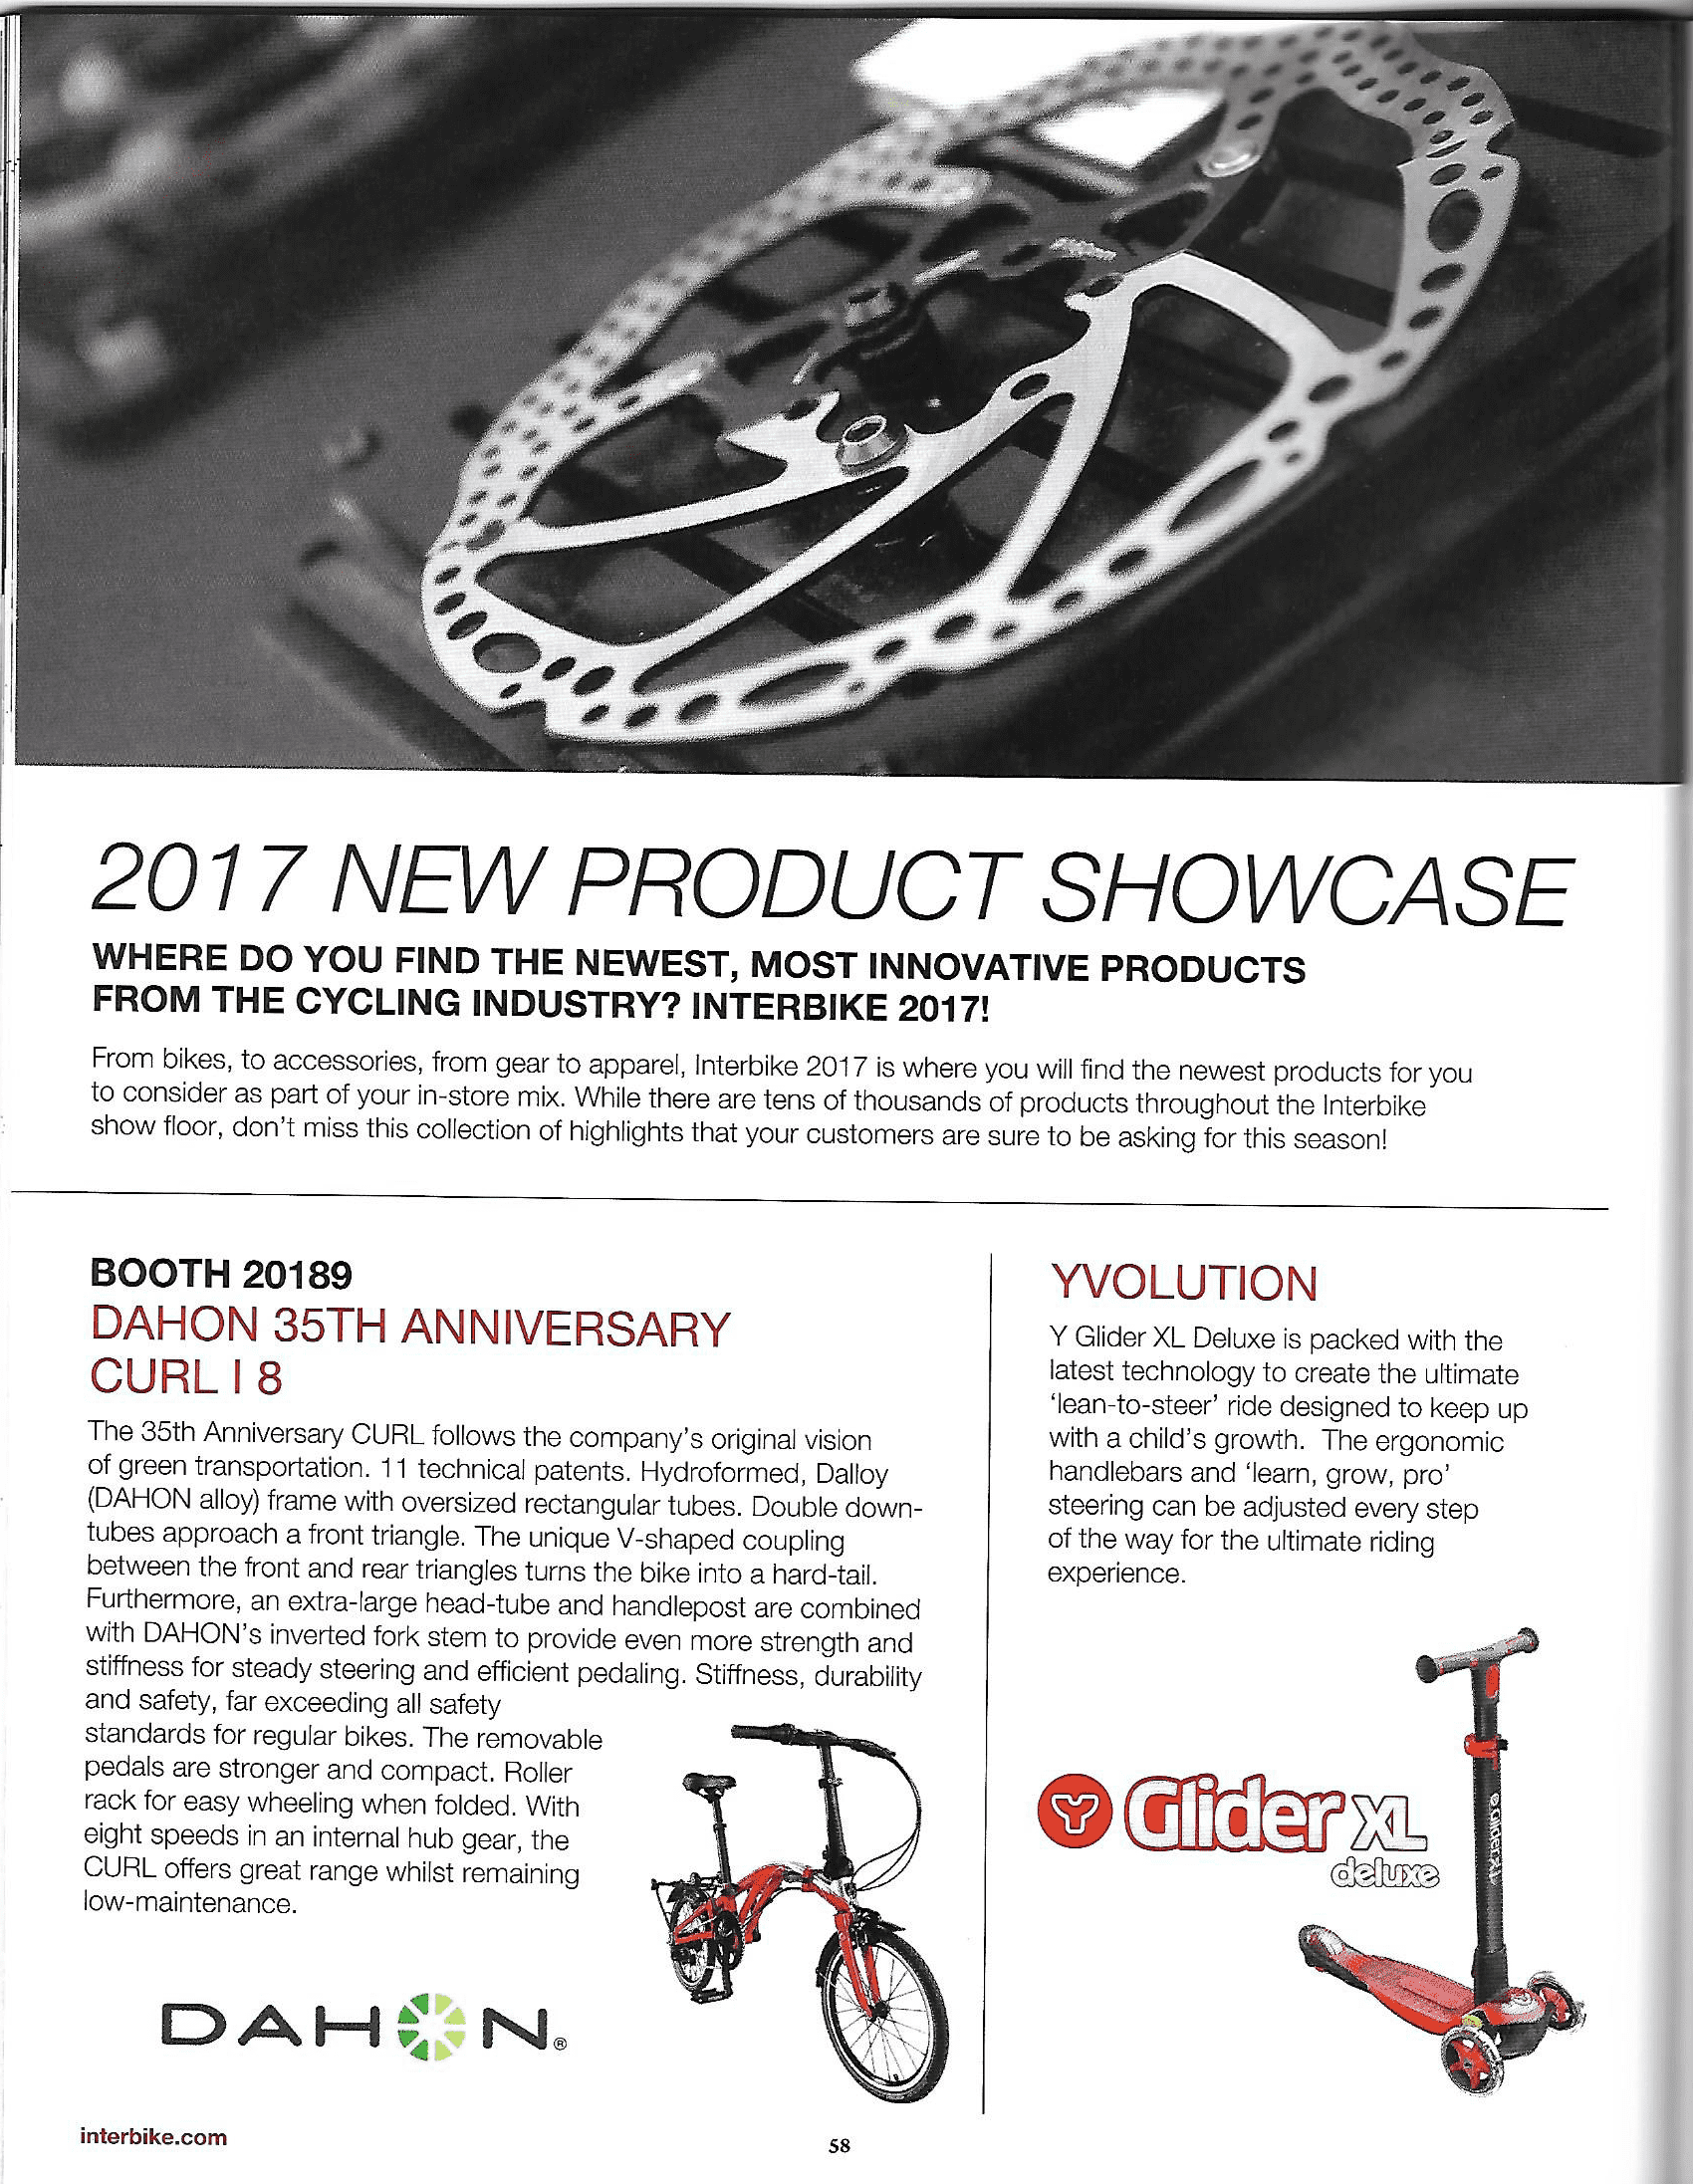 DAHON's Product Showcase in Interbike magazine